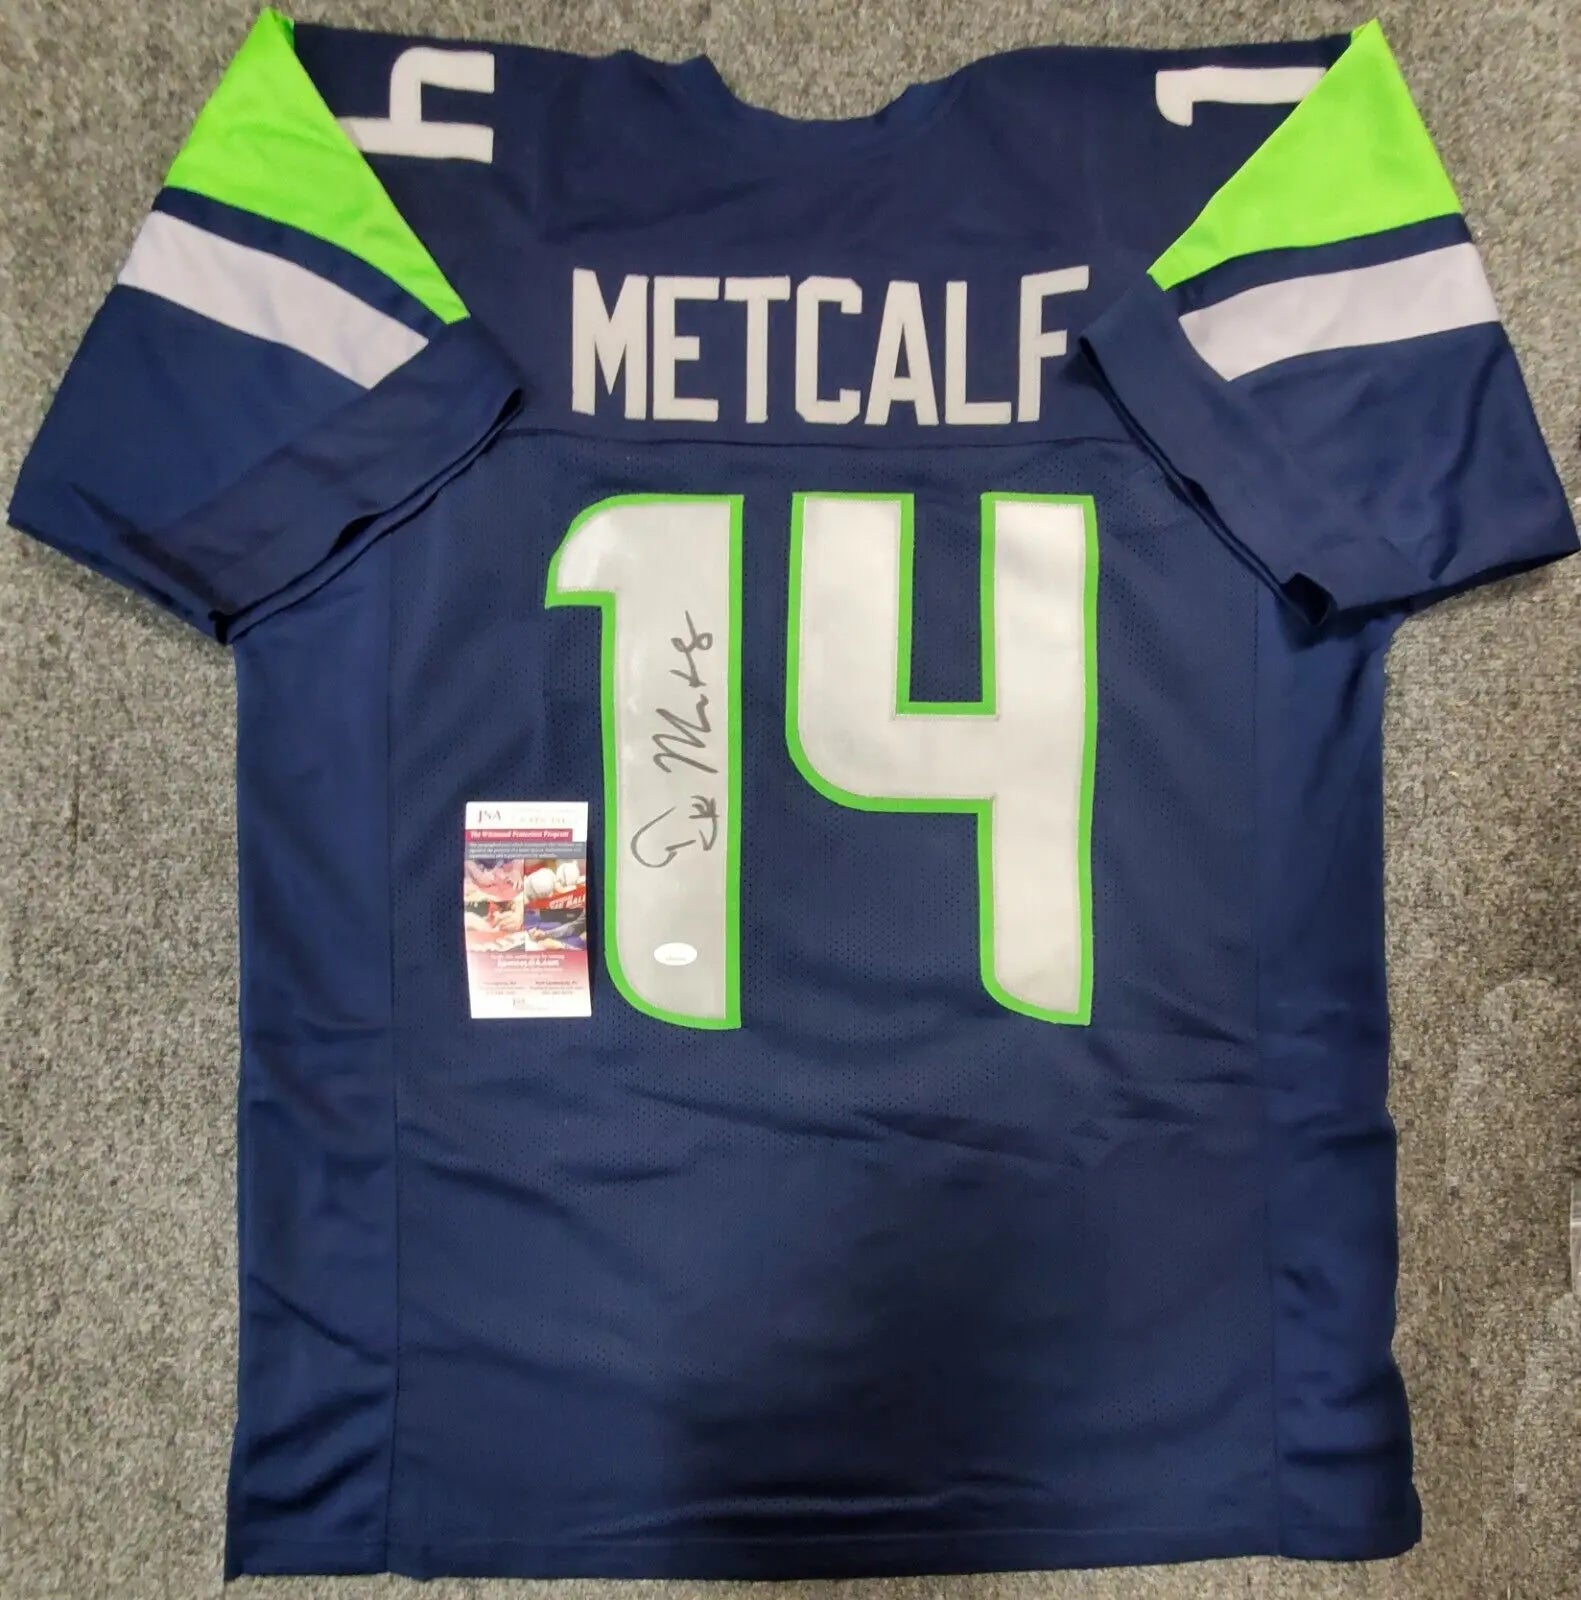 DK Metcalf NFL Jerseys, NFL Kit, NFL Uniforms